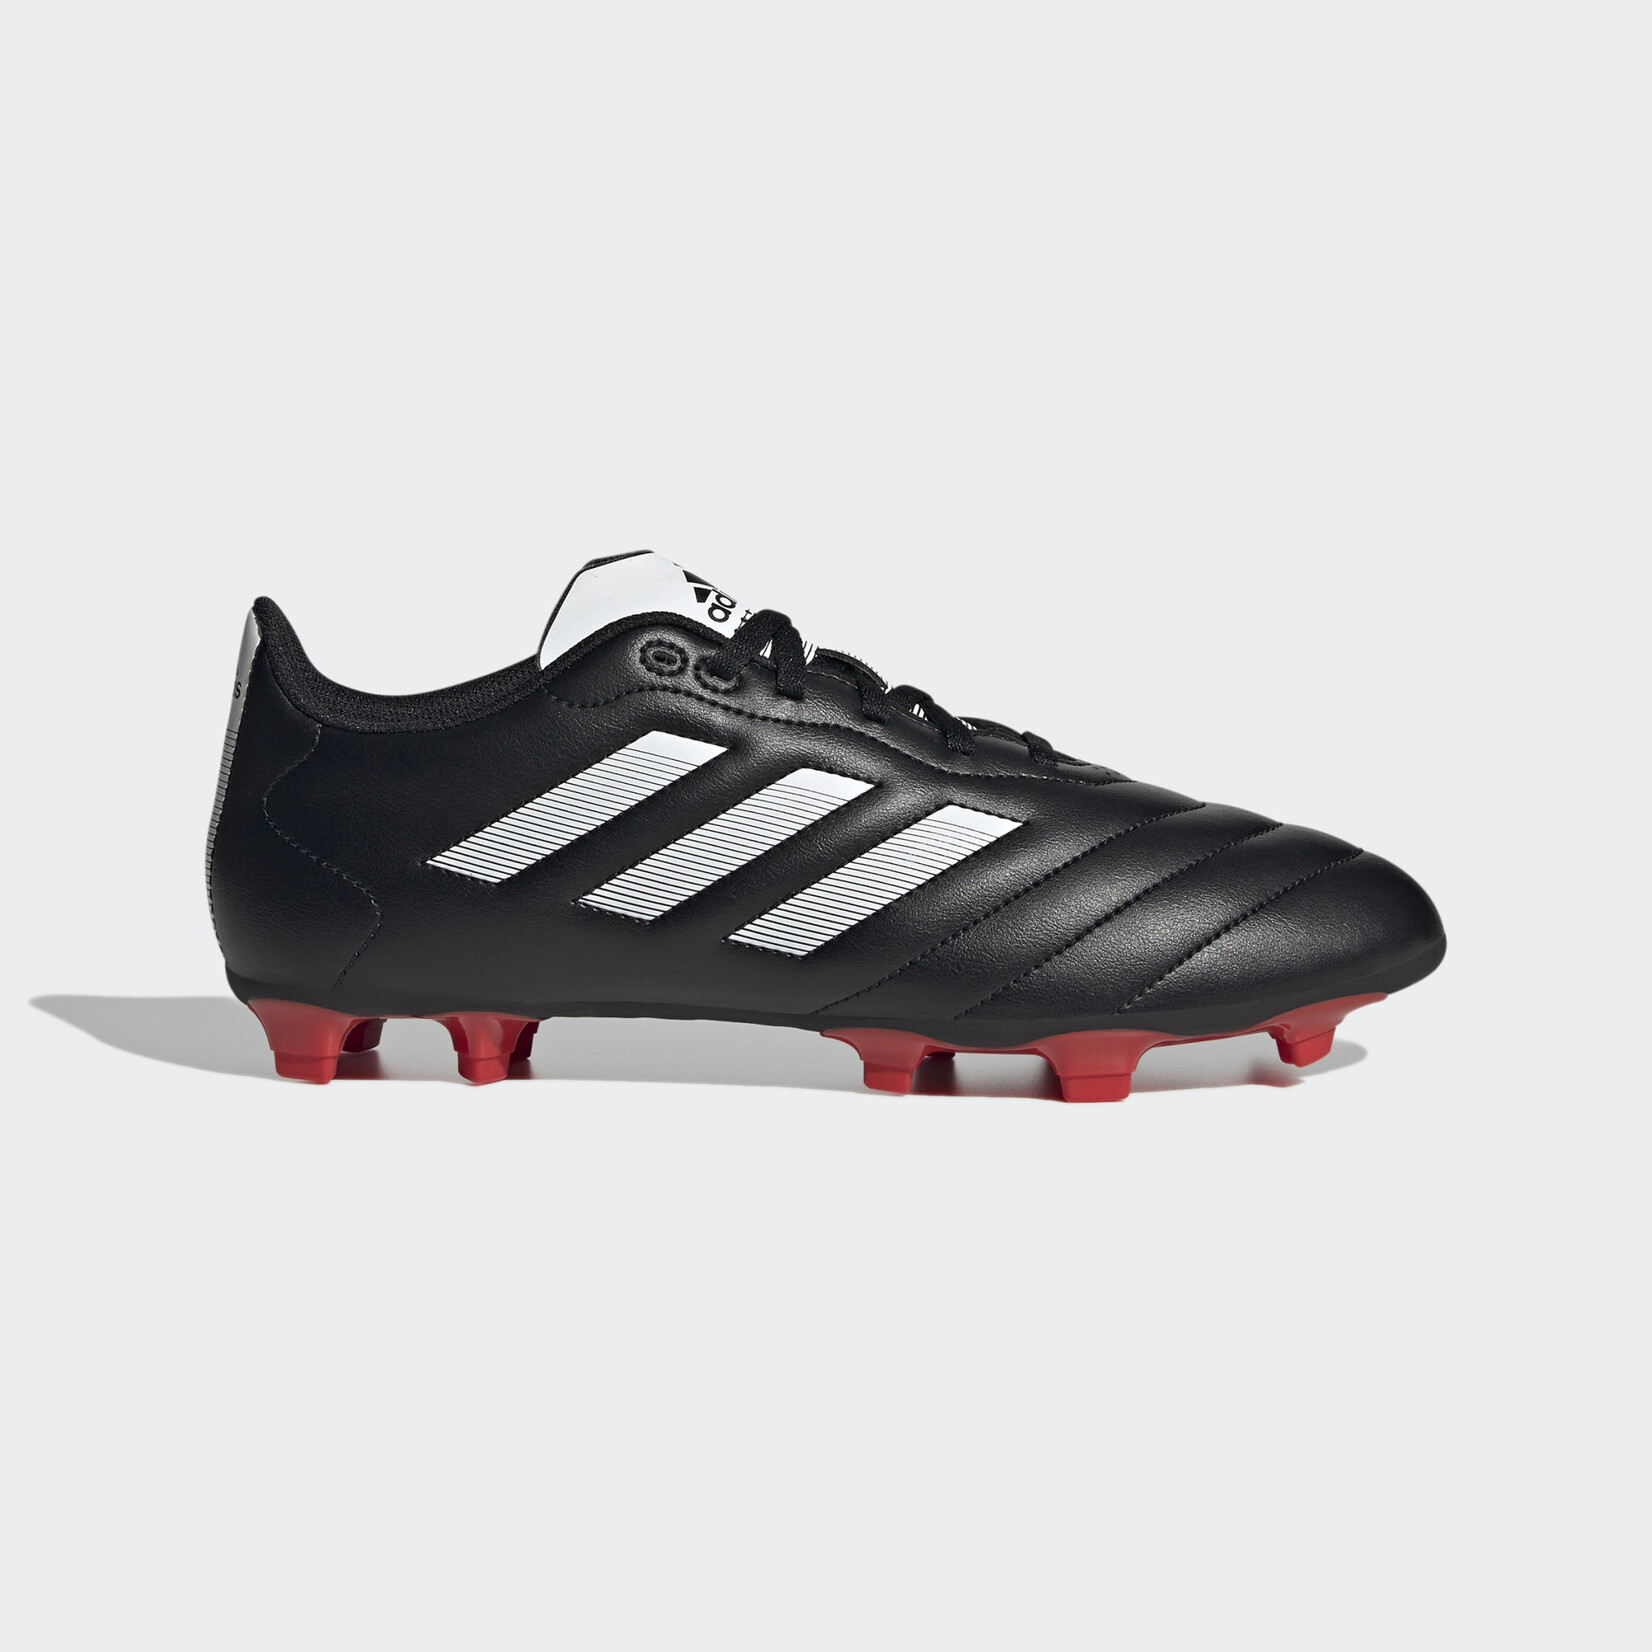 Adidas Goletto VIII Firm Ground Boots Black/White